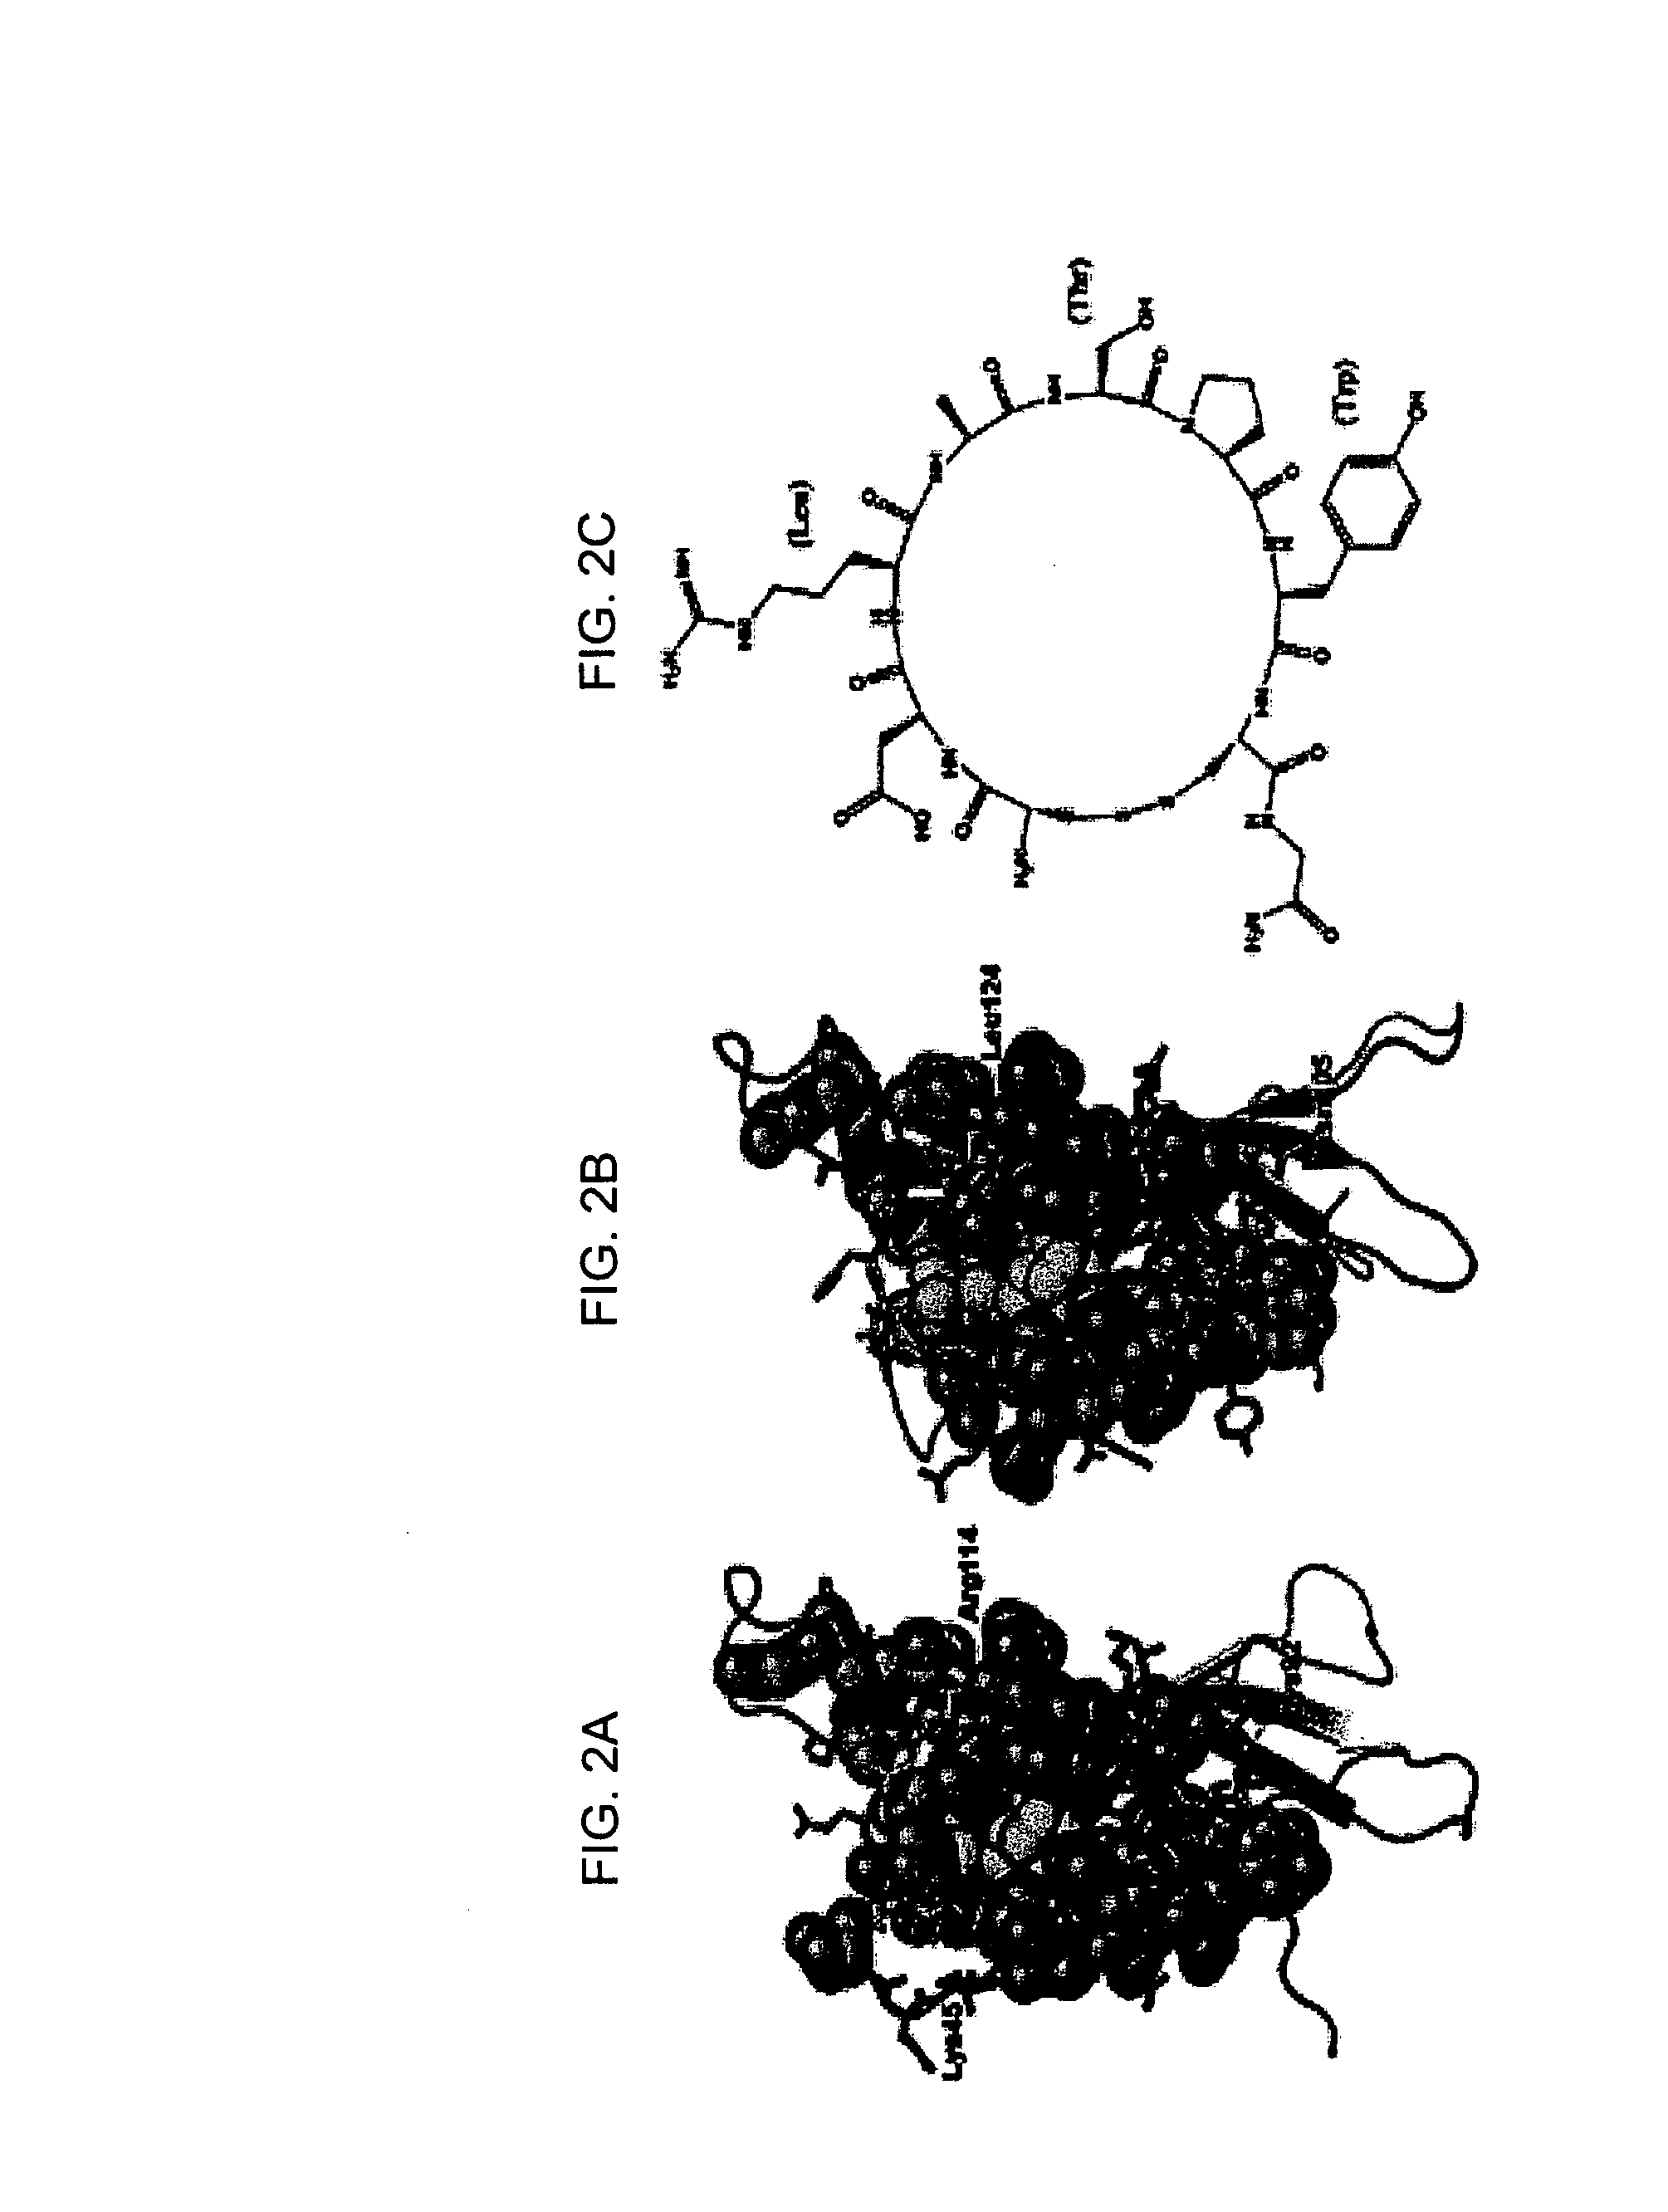 Peptide motifs for binding avidin or neutravidin